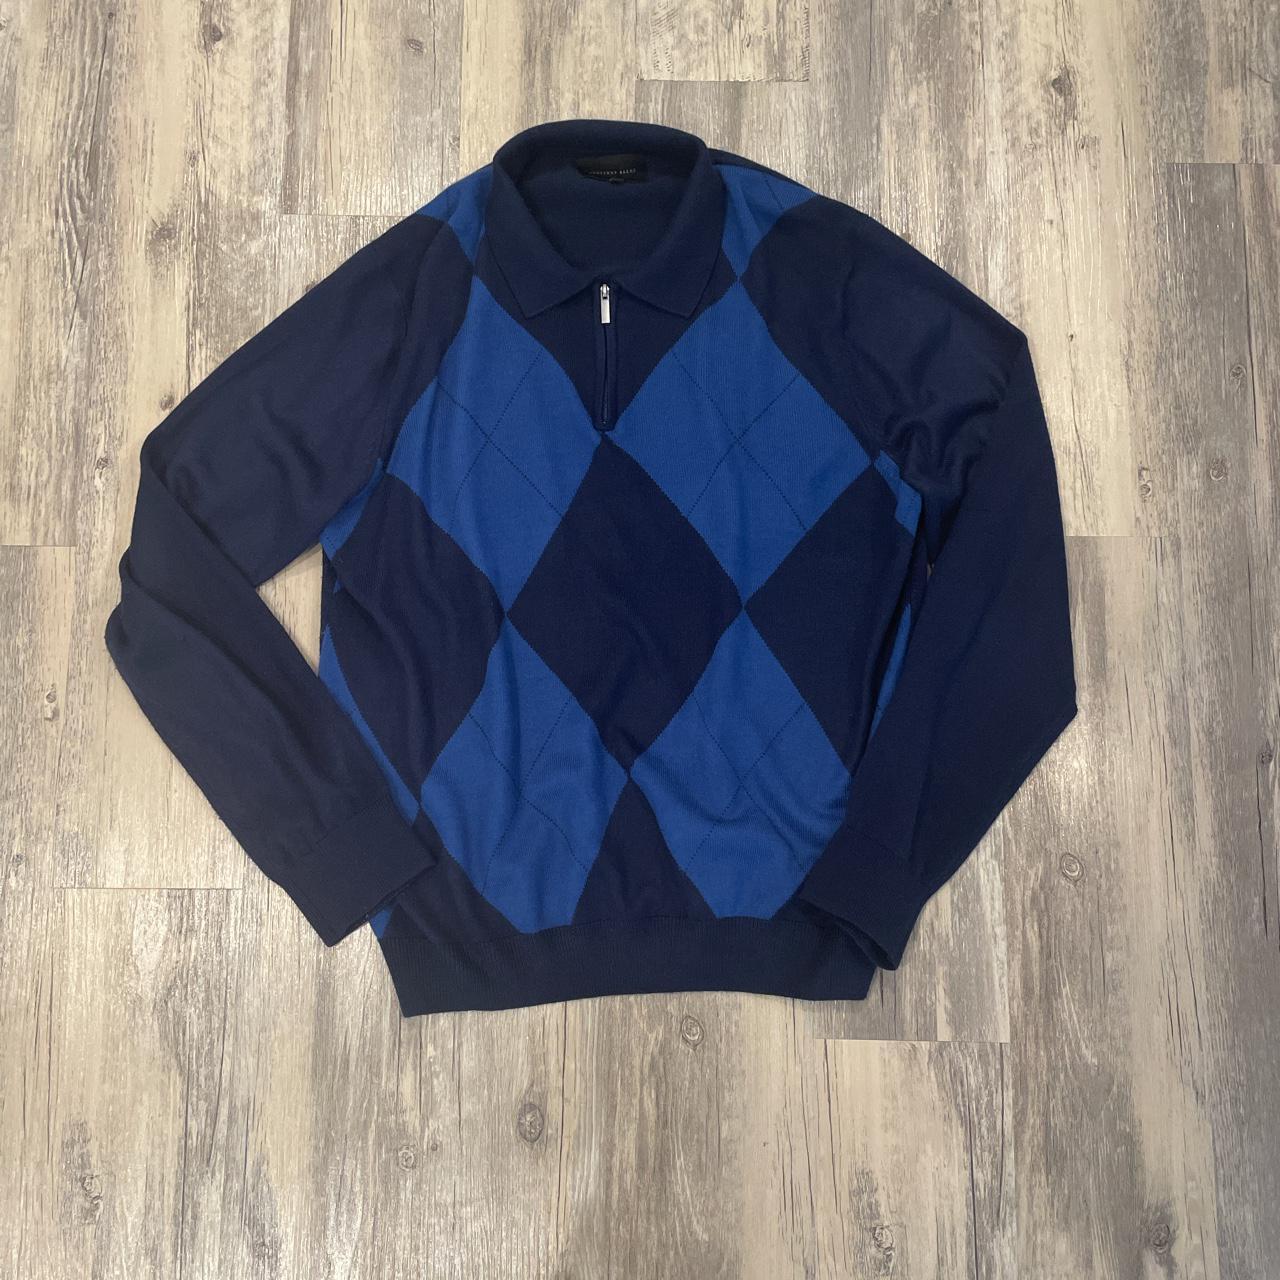 Product Image 1 - 90s inspired argyle sweater
Size :